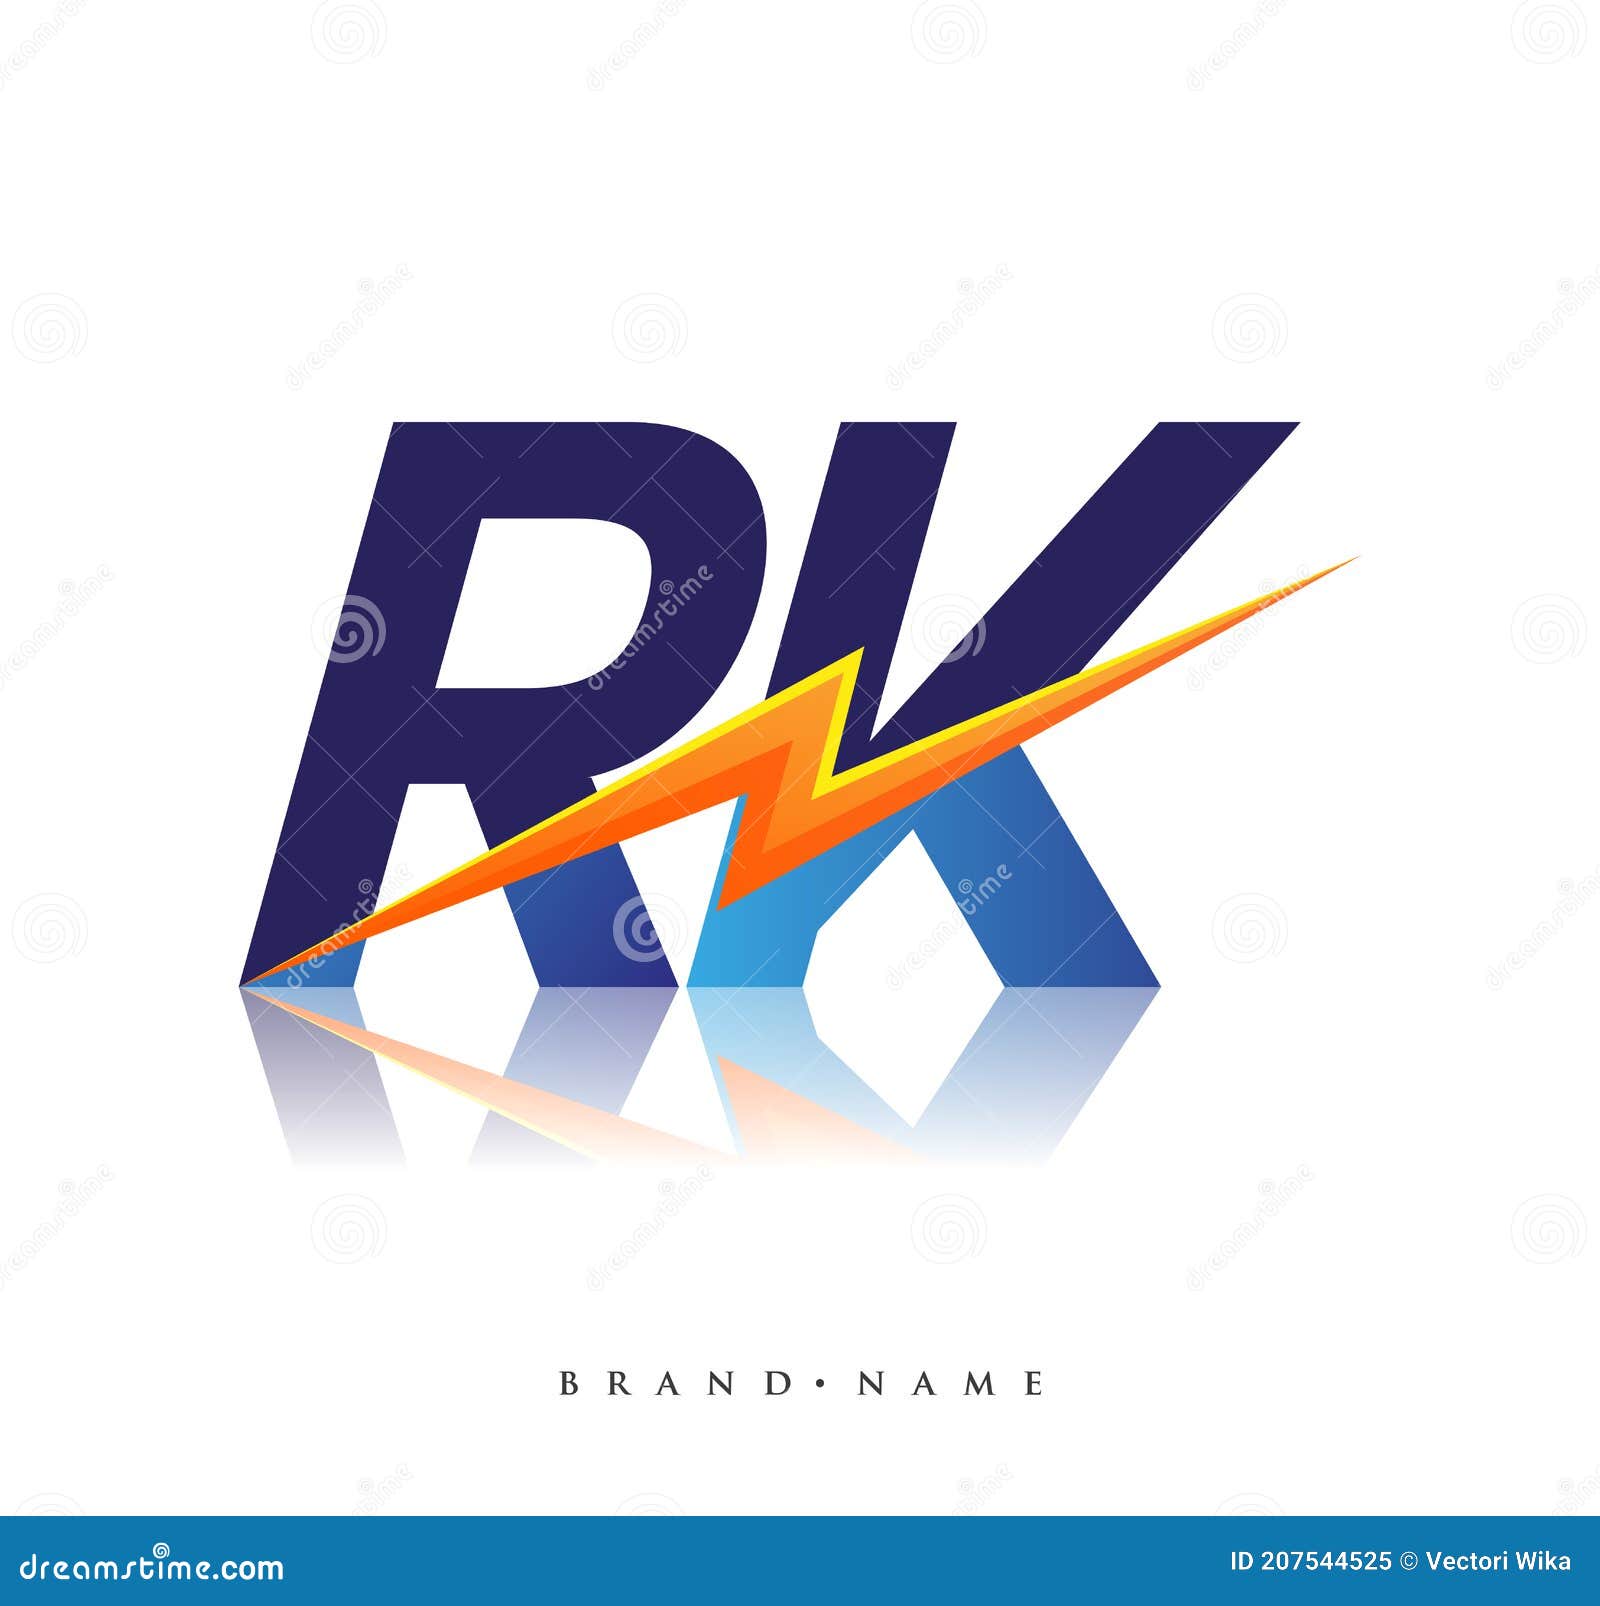 100,000 Rk logo Vector Images | Depositphotos